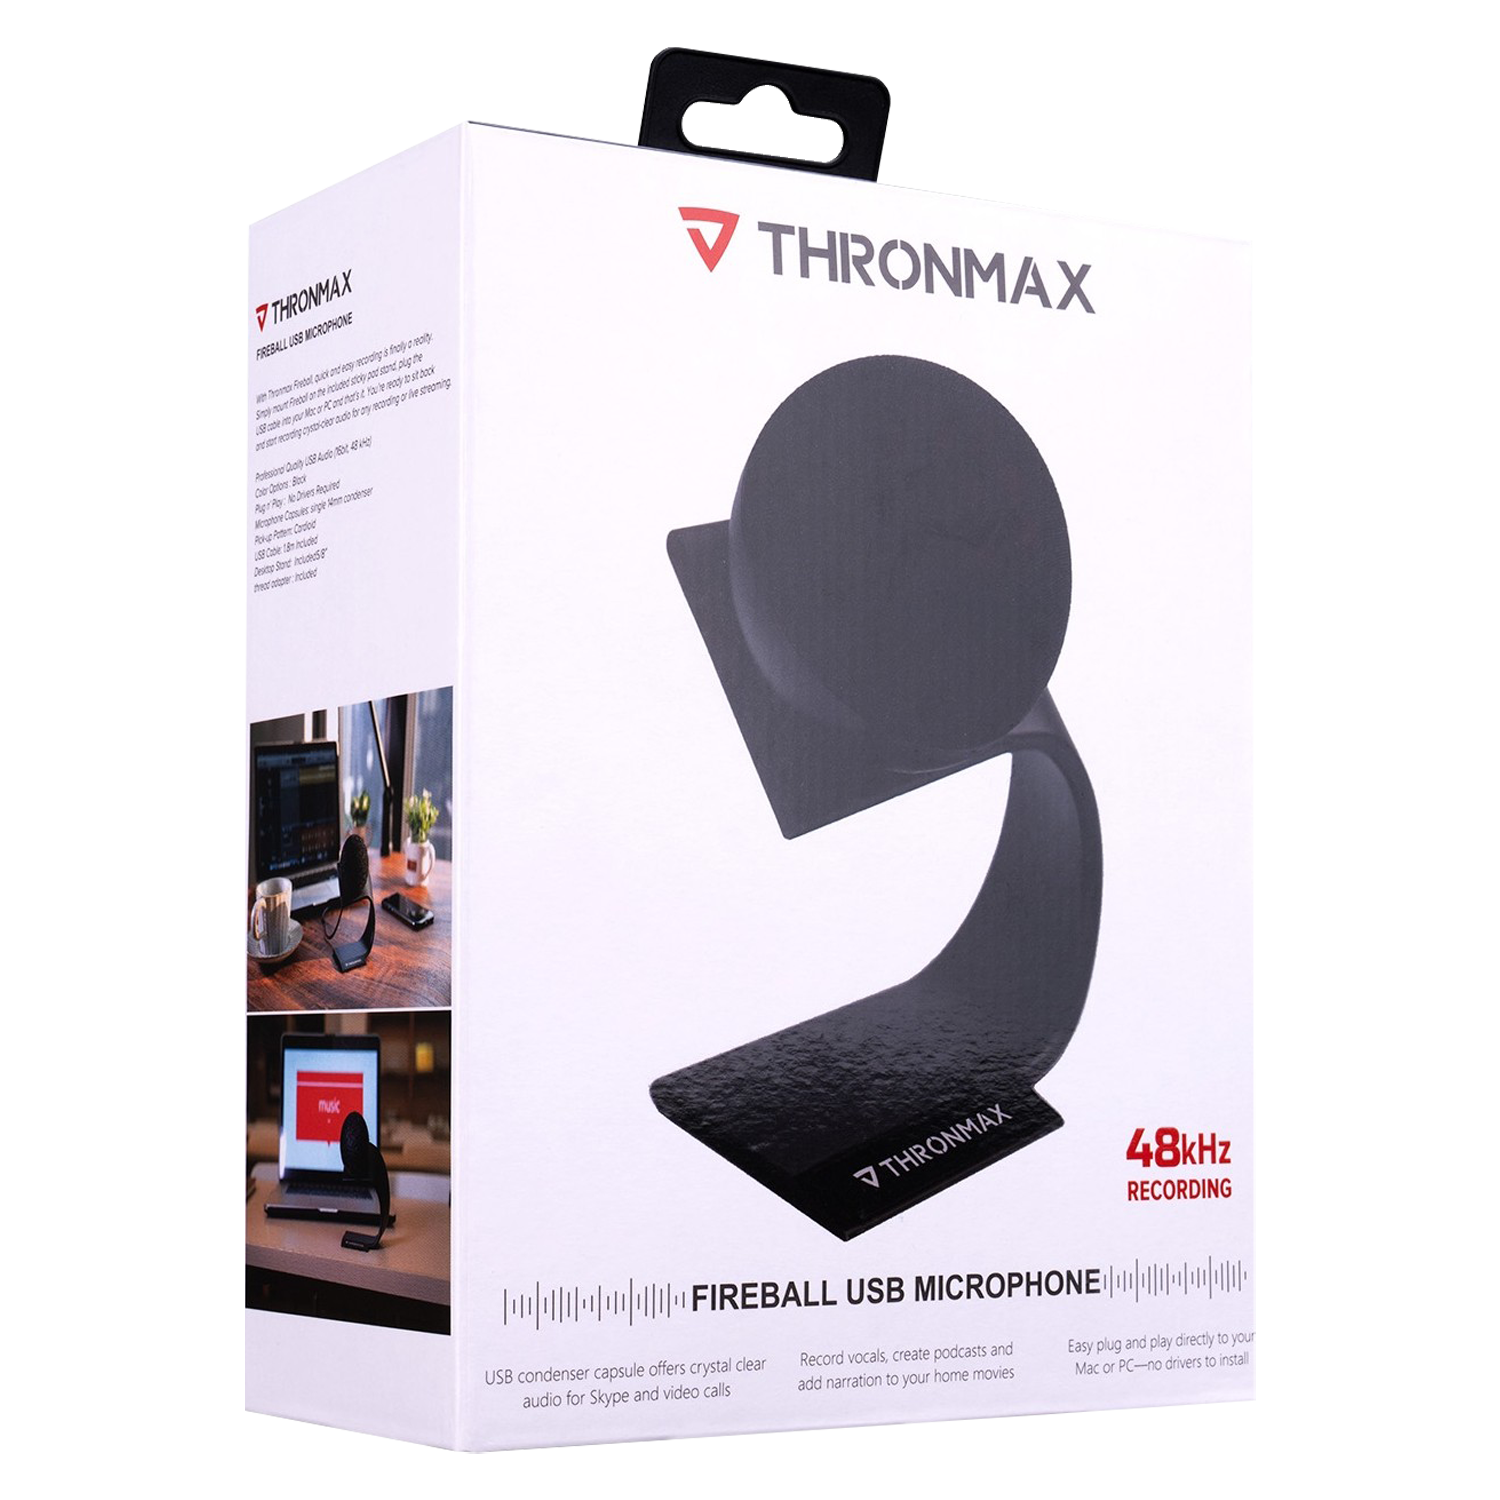 Microfone Thronmax Fireball M9 48KHZ USB - Preto (977995)